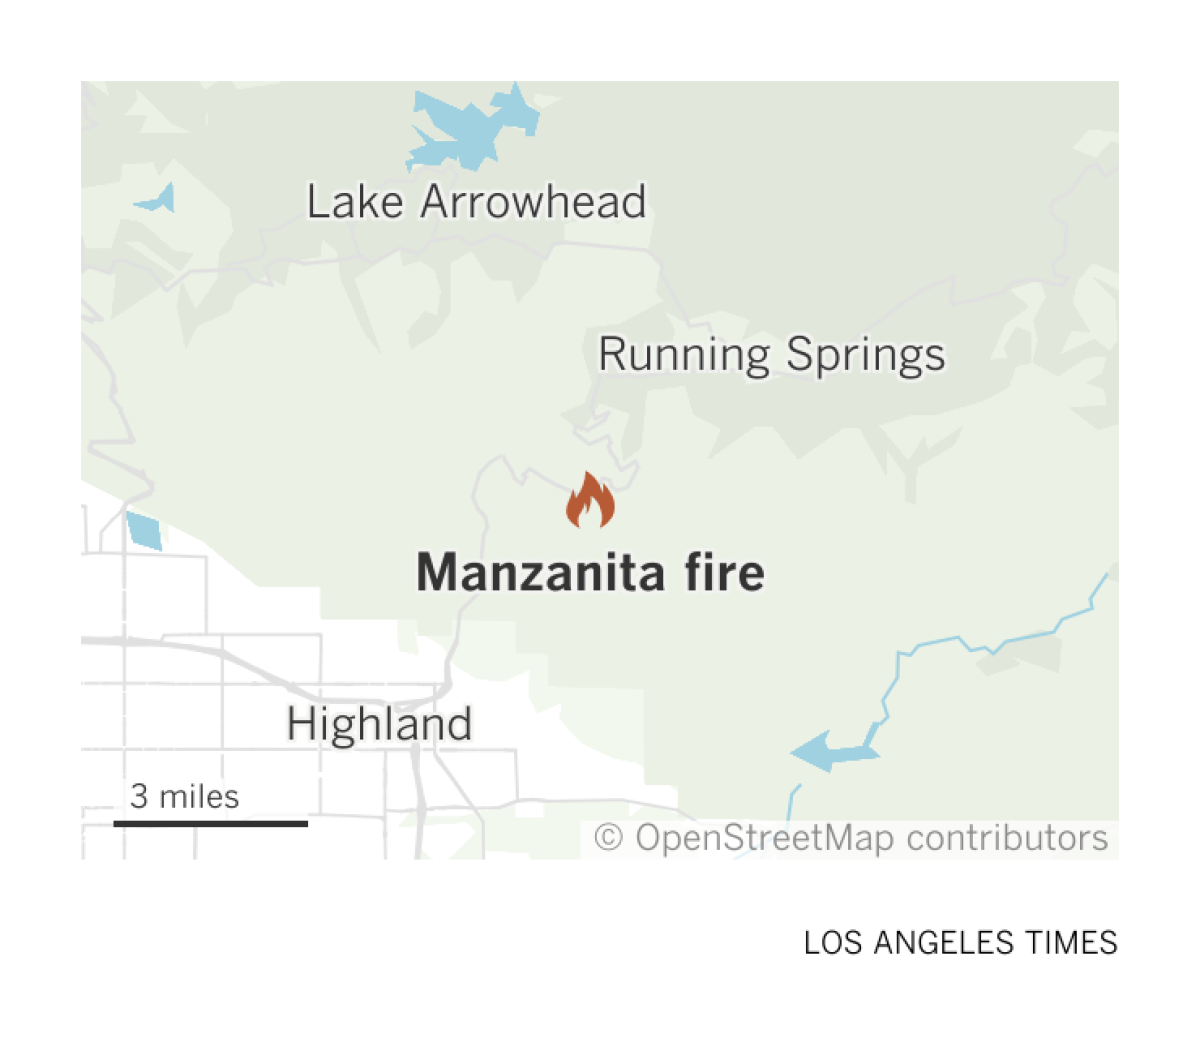 A map showing the Manzanita fire in the San Bernardino Mountains